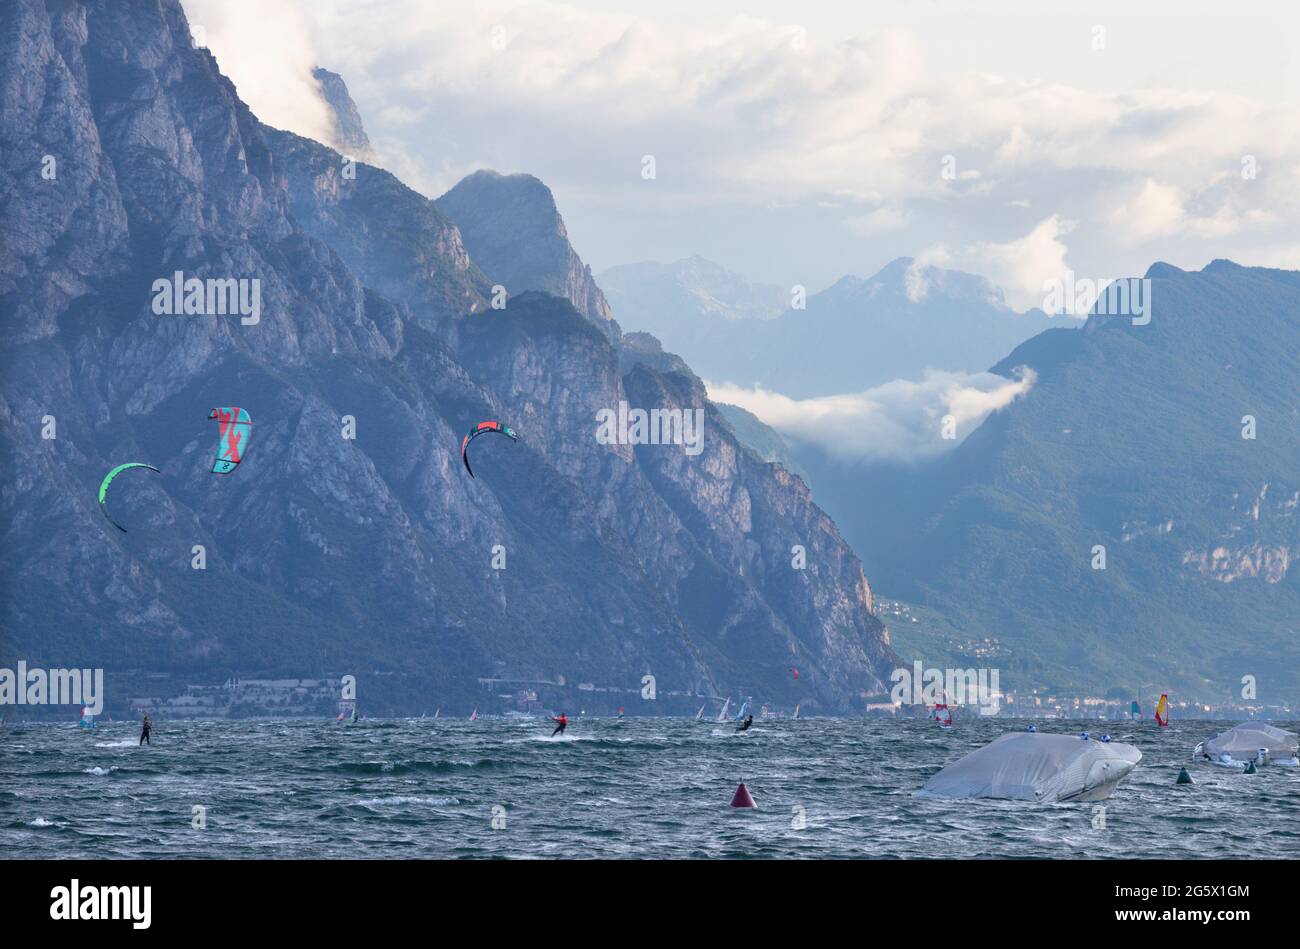 MALCESINE, ITALY - JUNE 13, 2019: The windsurfers on the Lago di Garda. Stock Photo